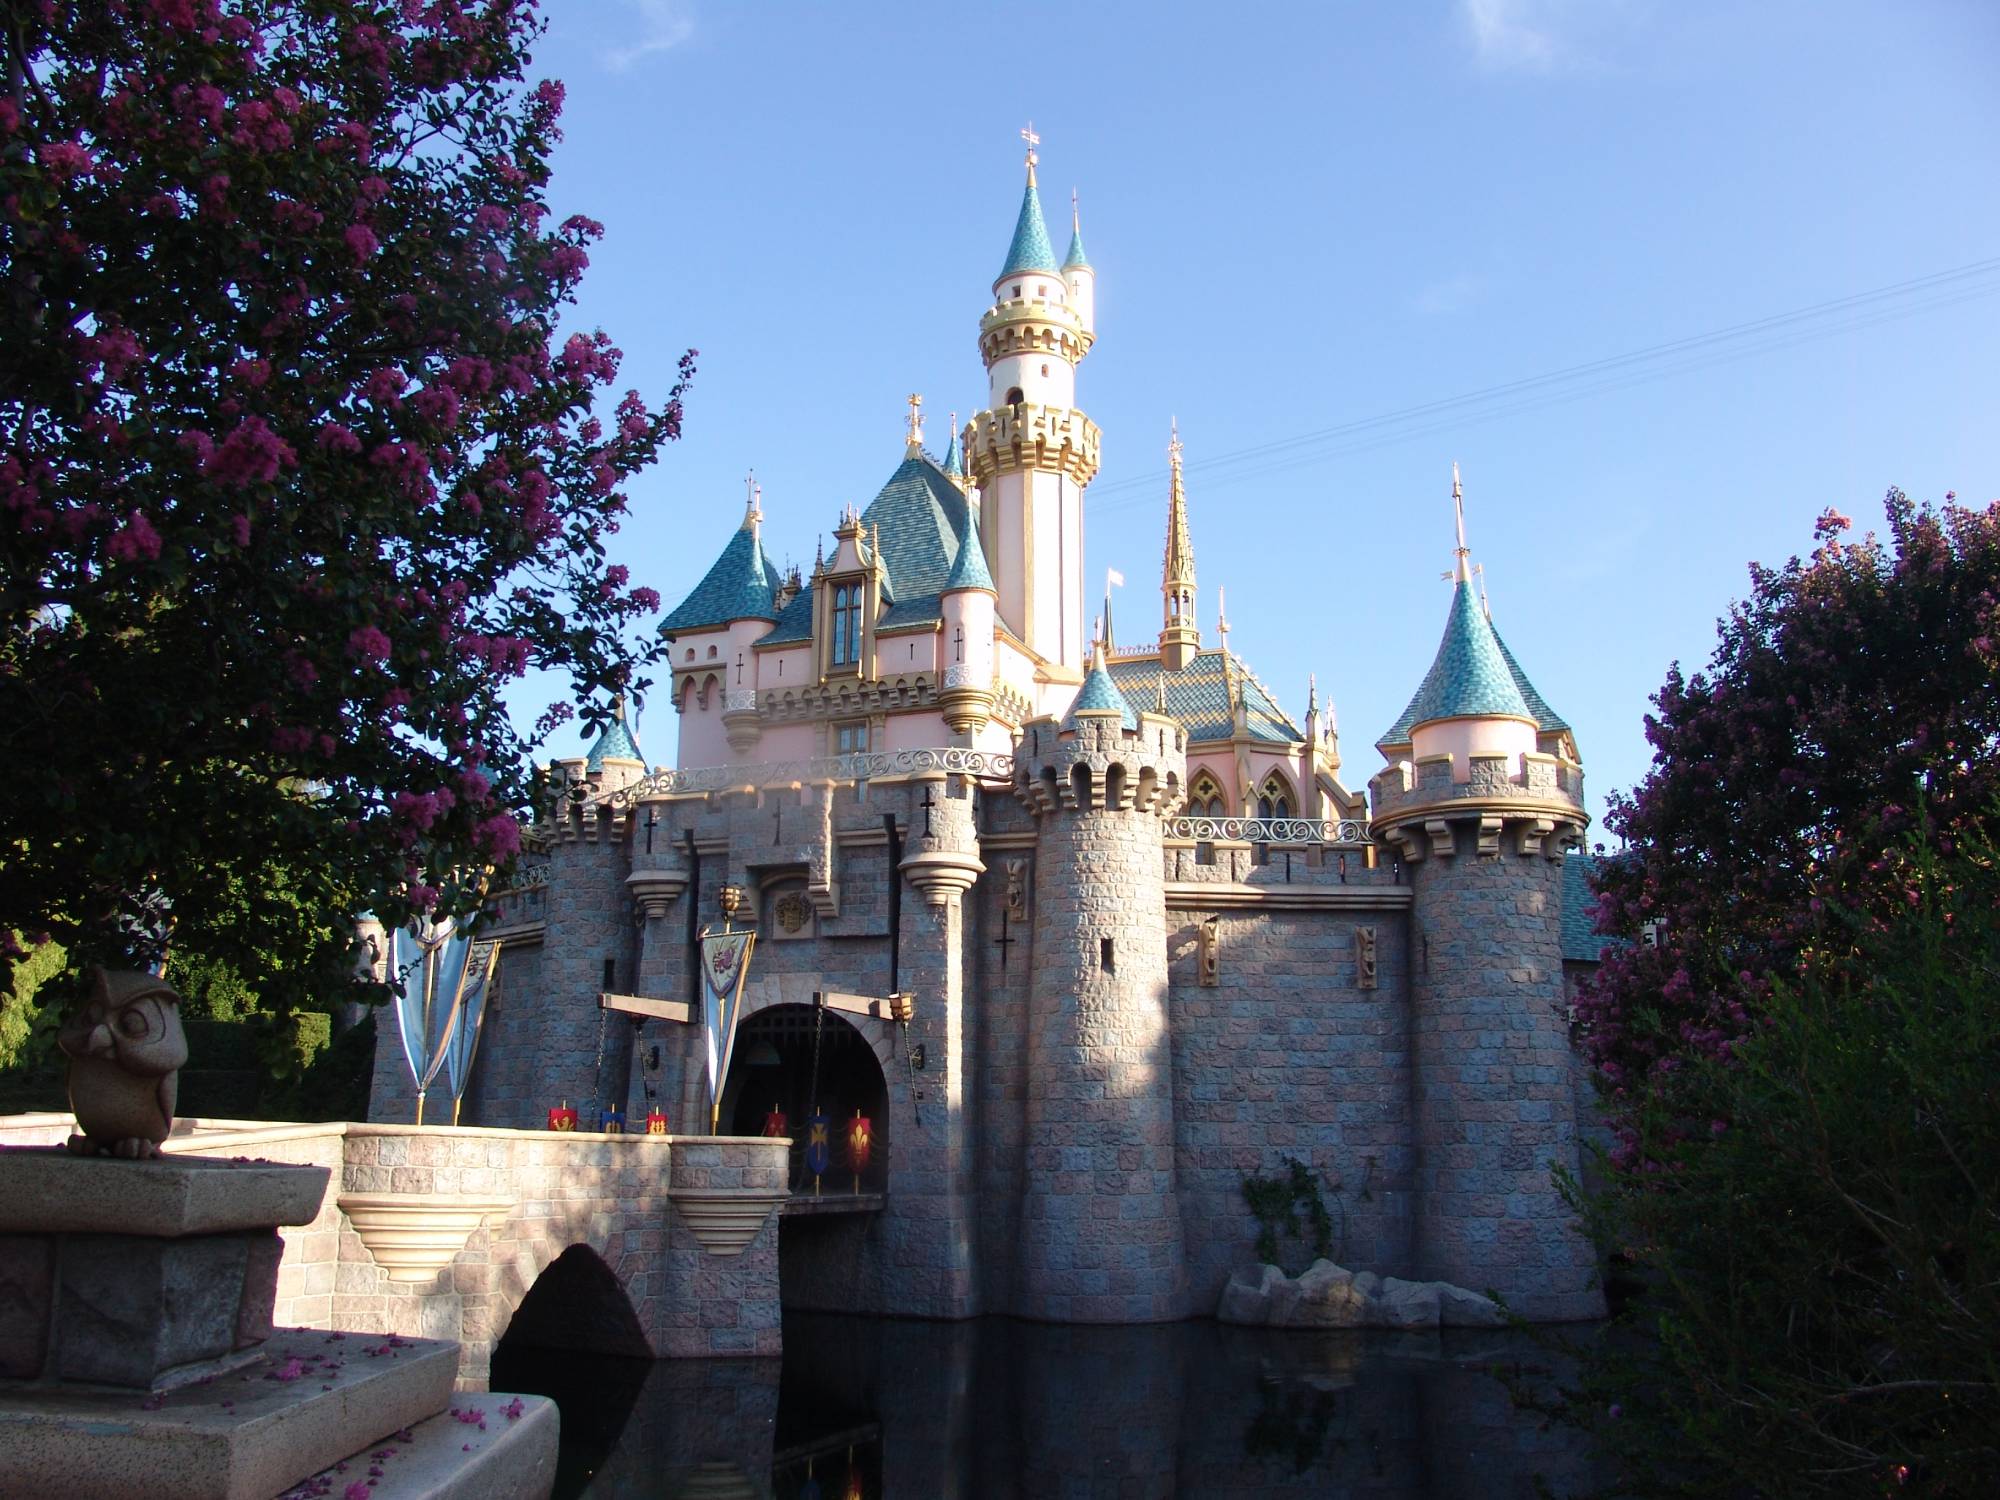 Disneyland Park - Sleeping Beauty Castle